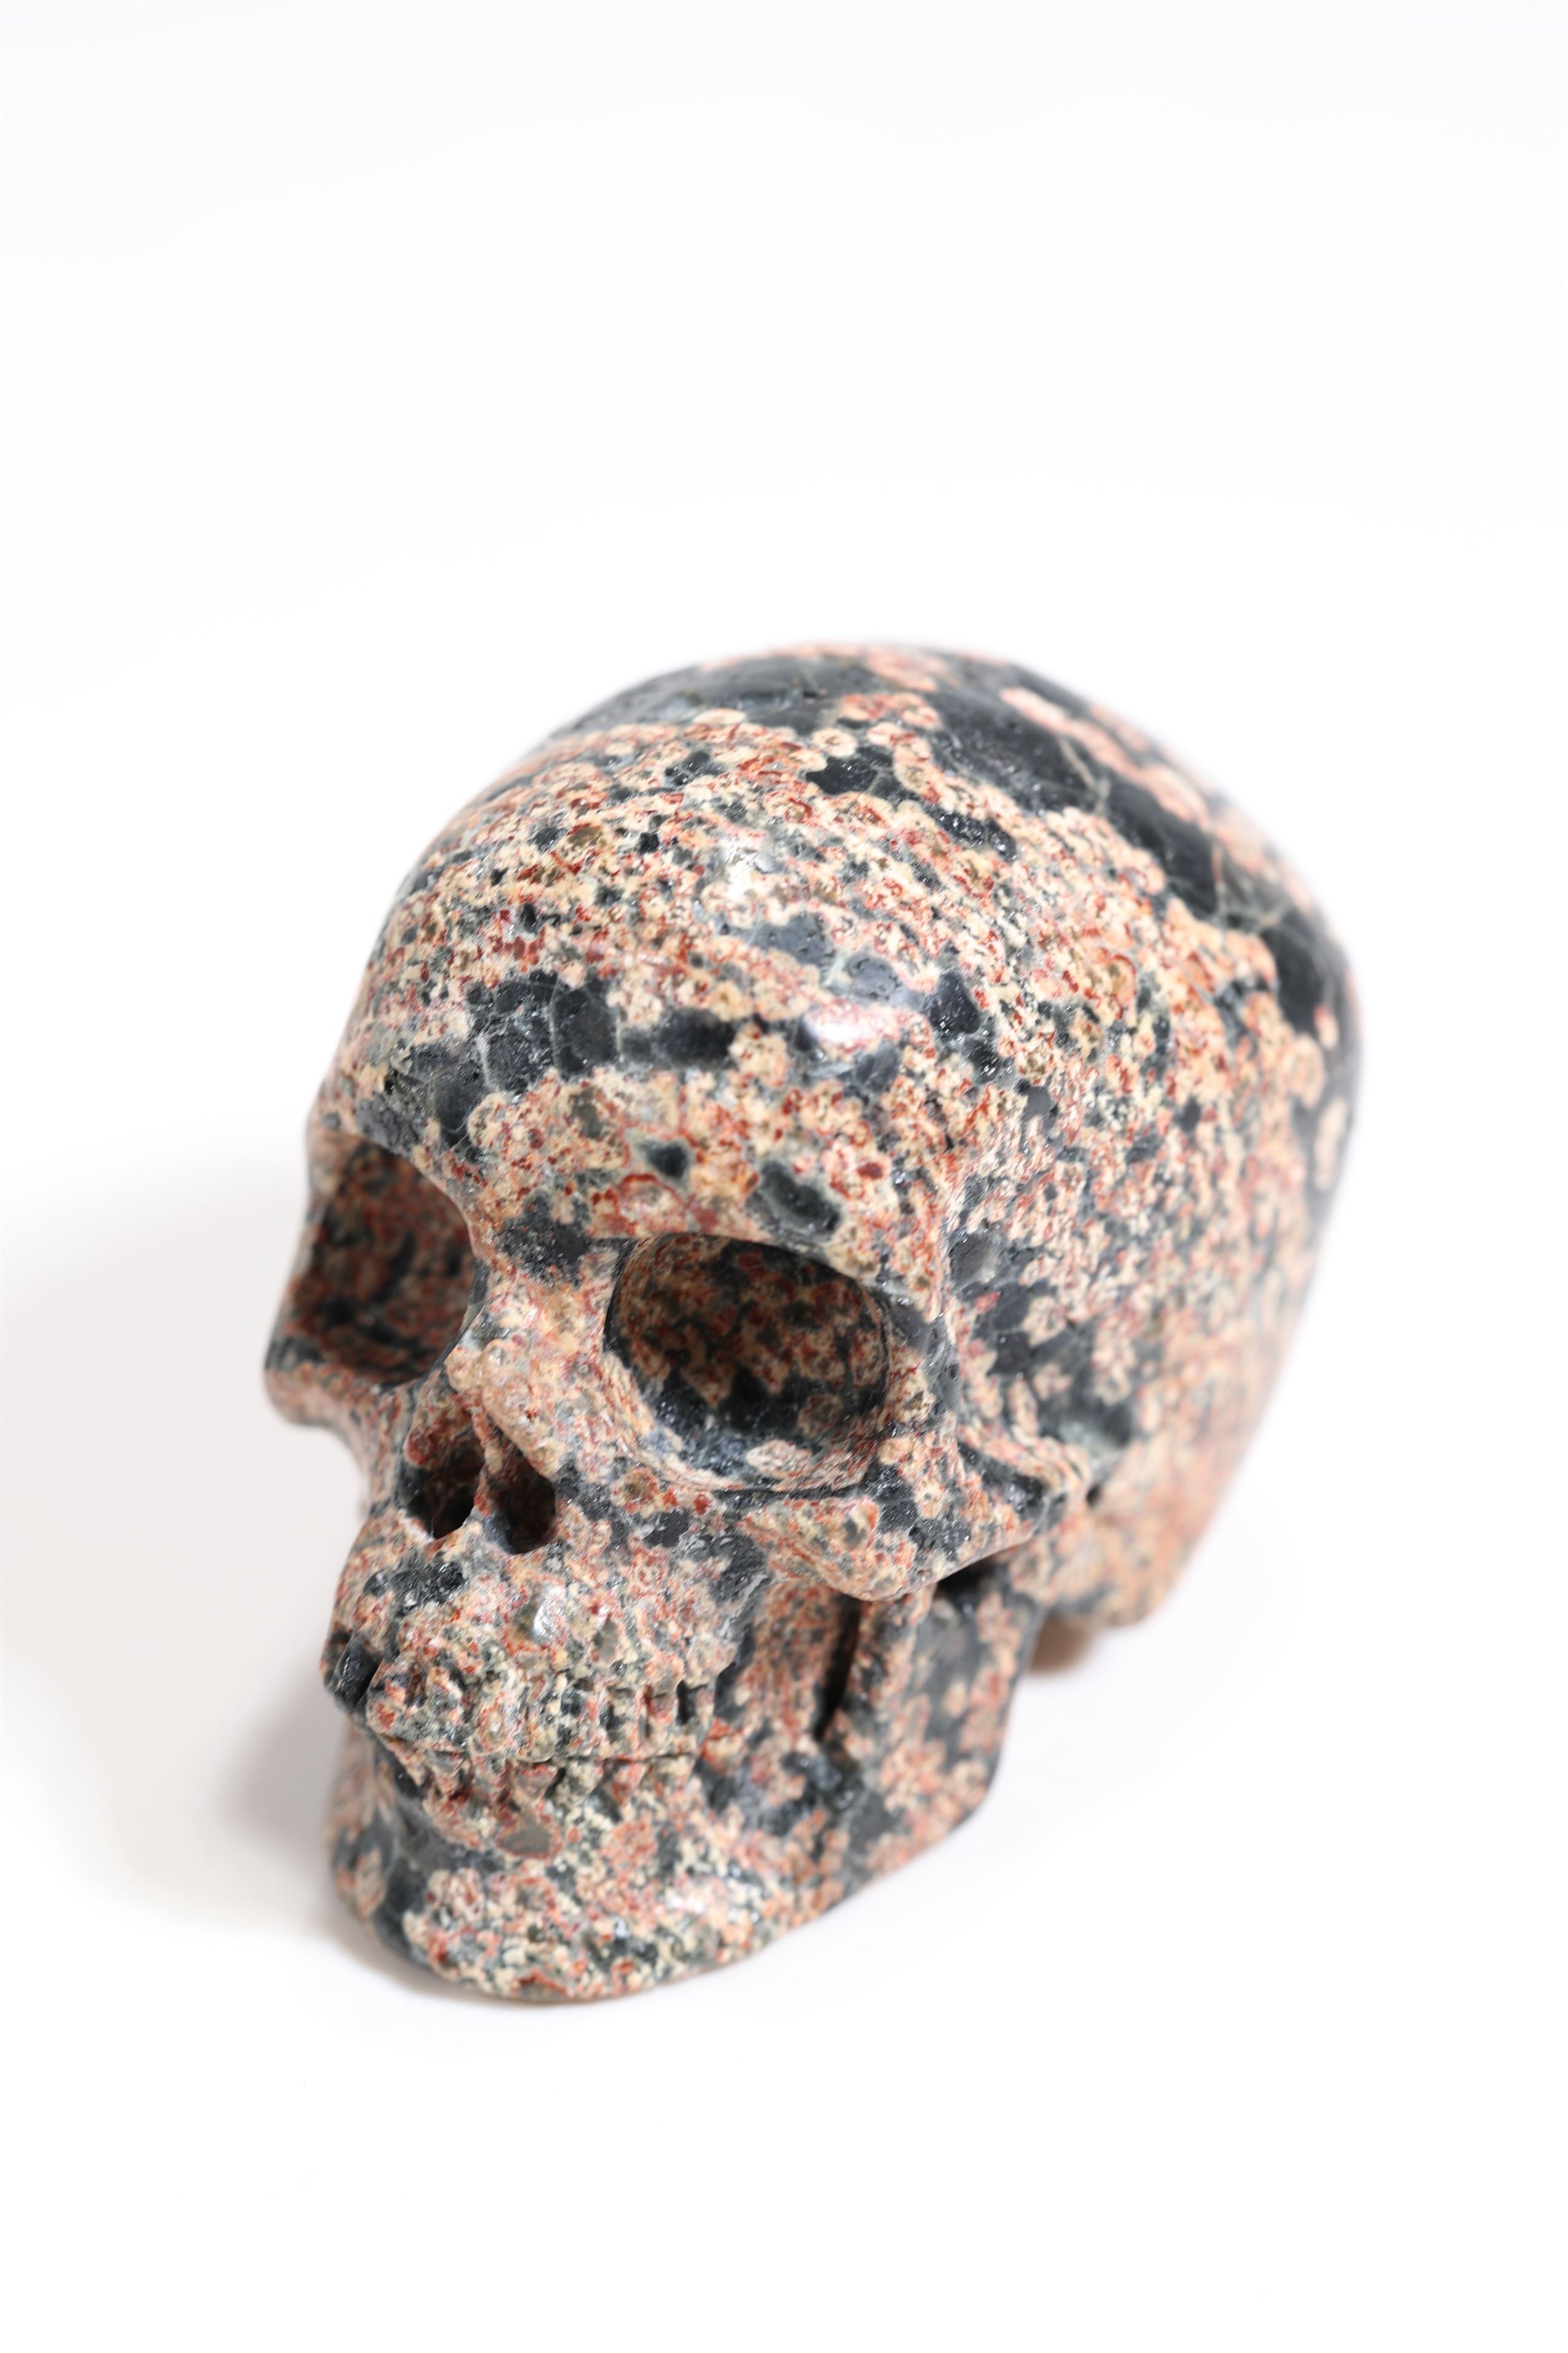 Firework Obsidian 2" Skull - Forgotten Rarities